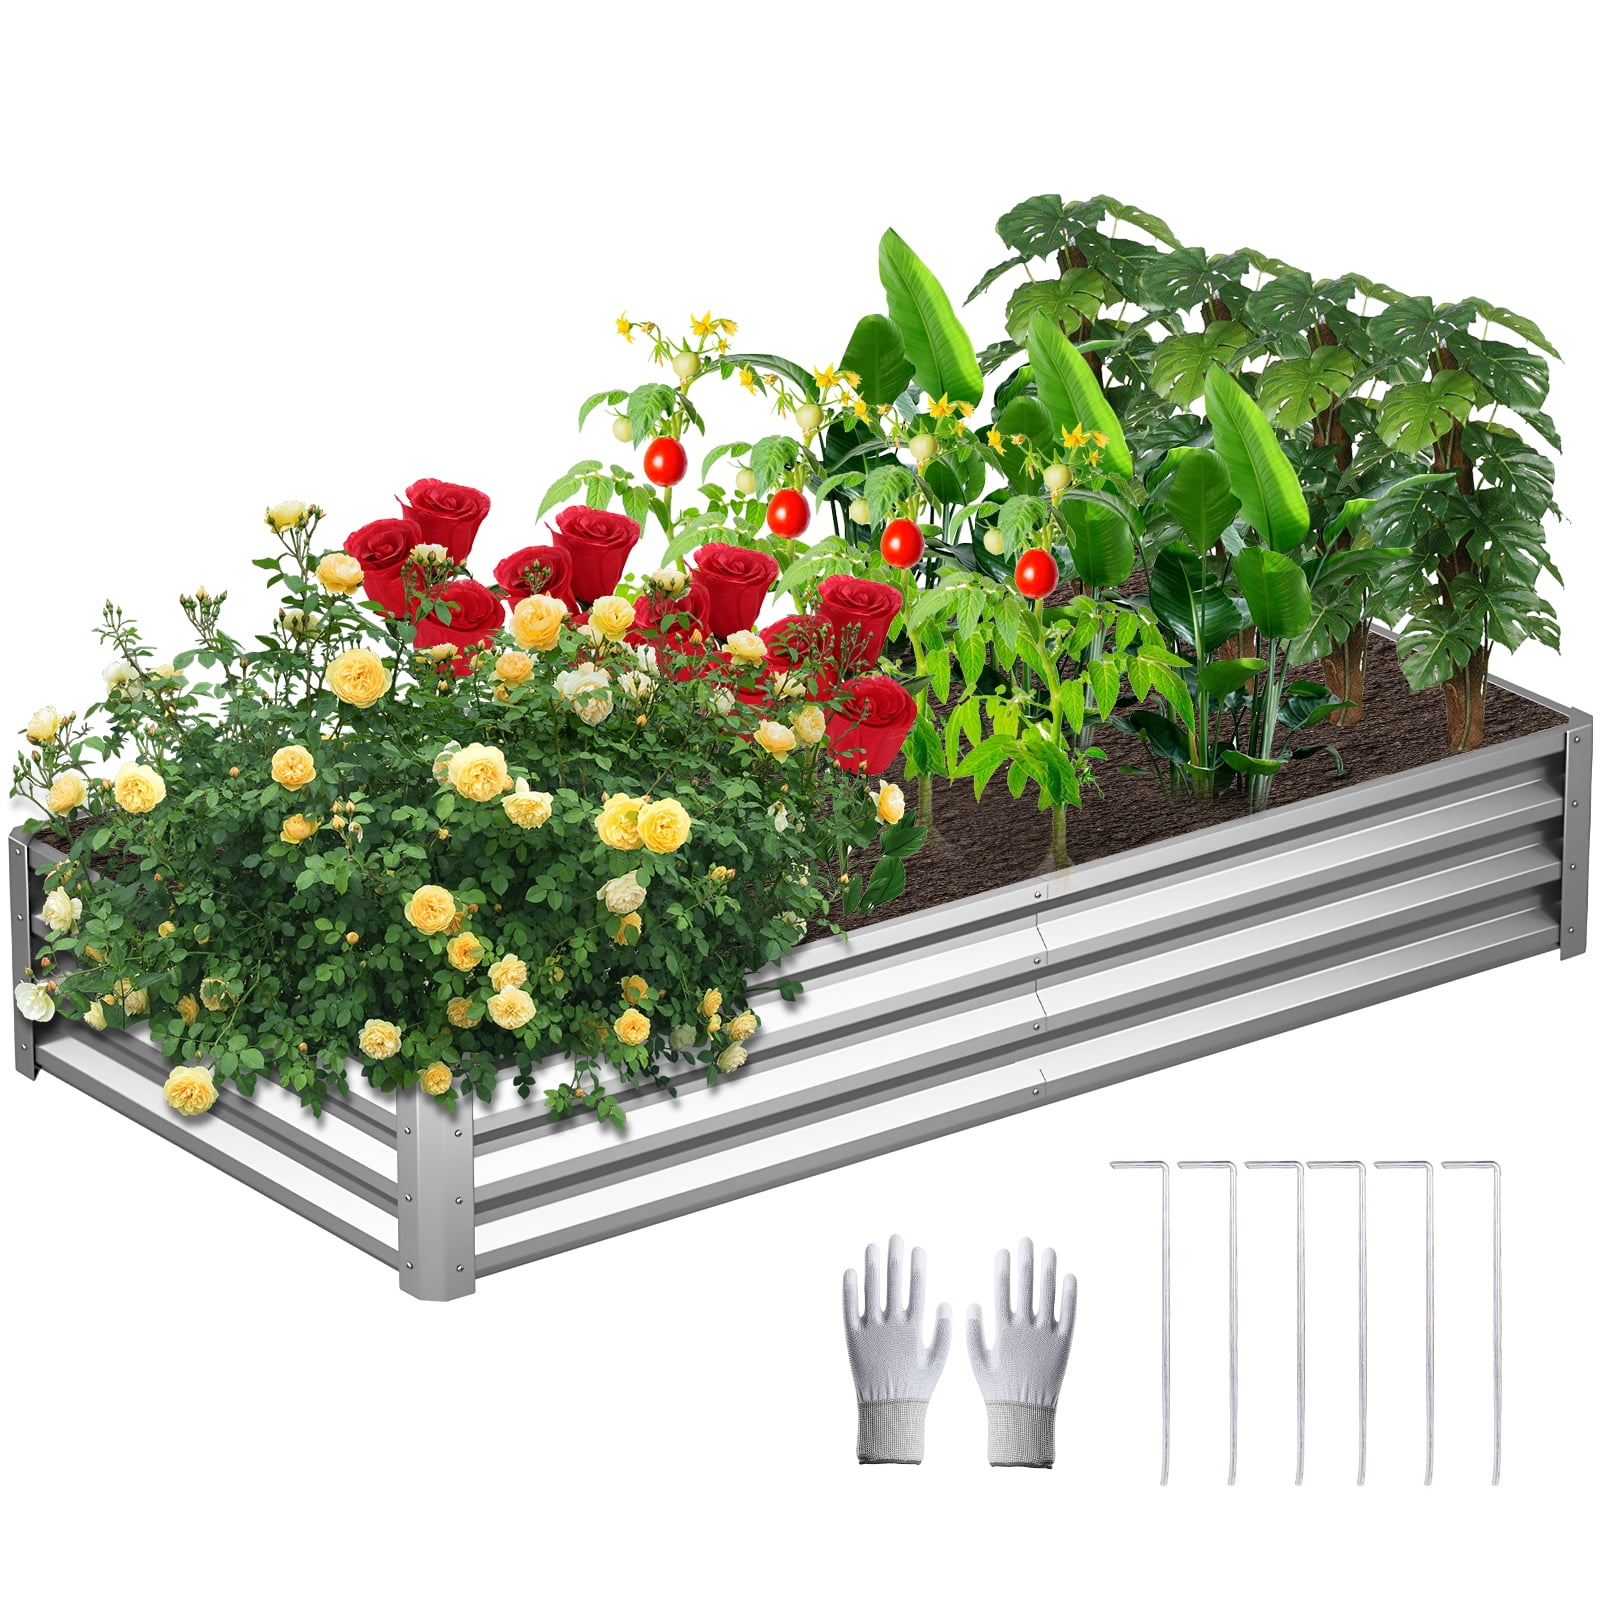 FOYUEE Galvanized Raised Garden Beds for Vegetables Large Metal Planter Box  Steel Kit Flower Herb, 8x4x1ft